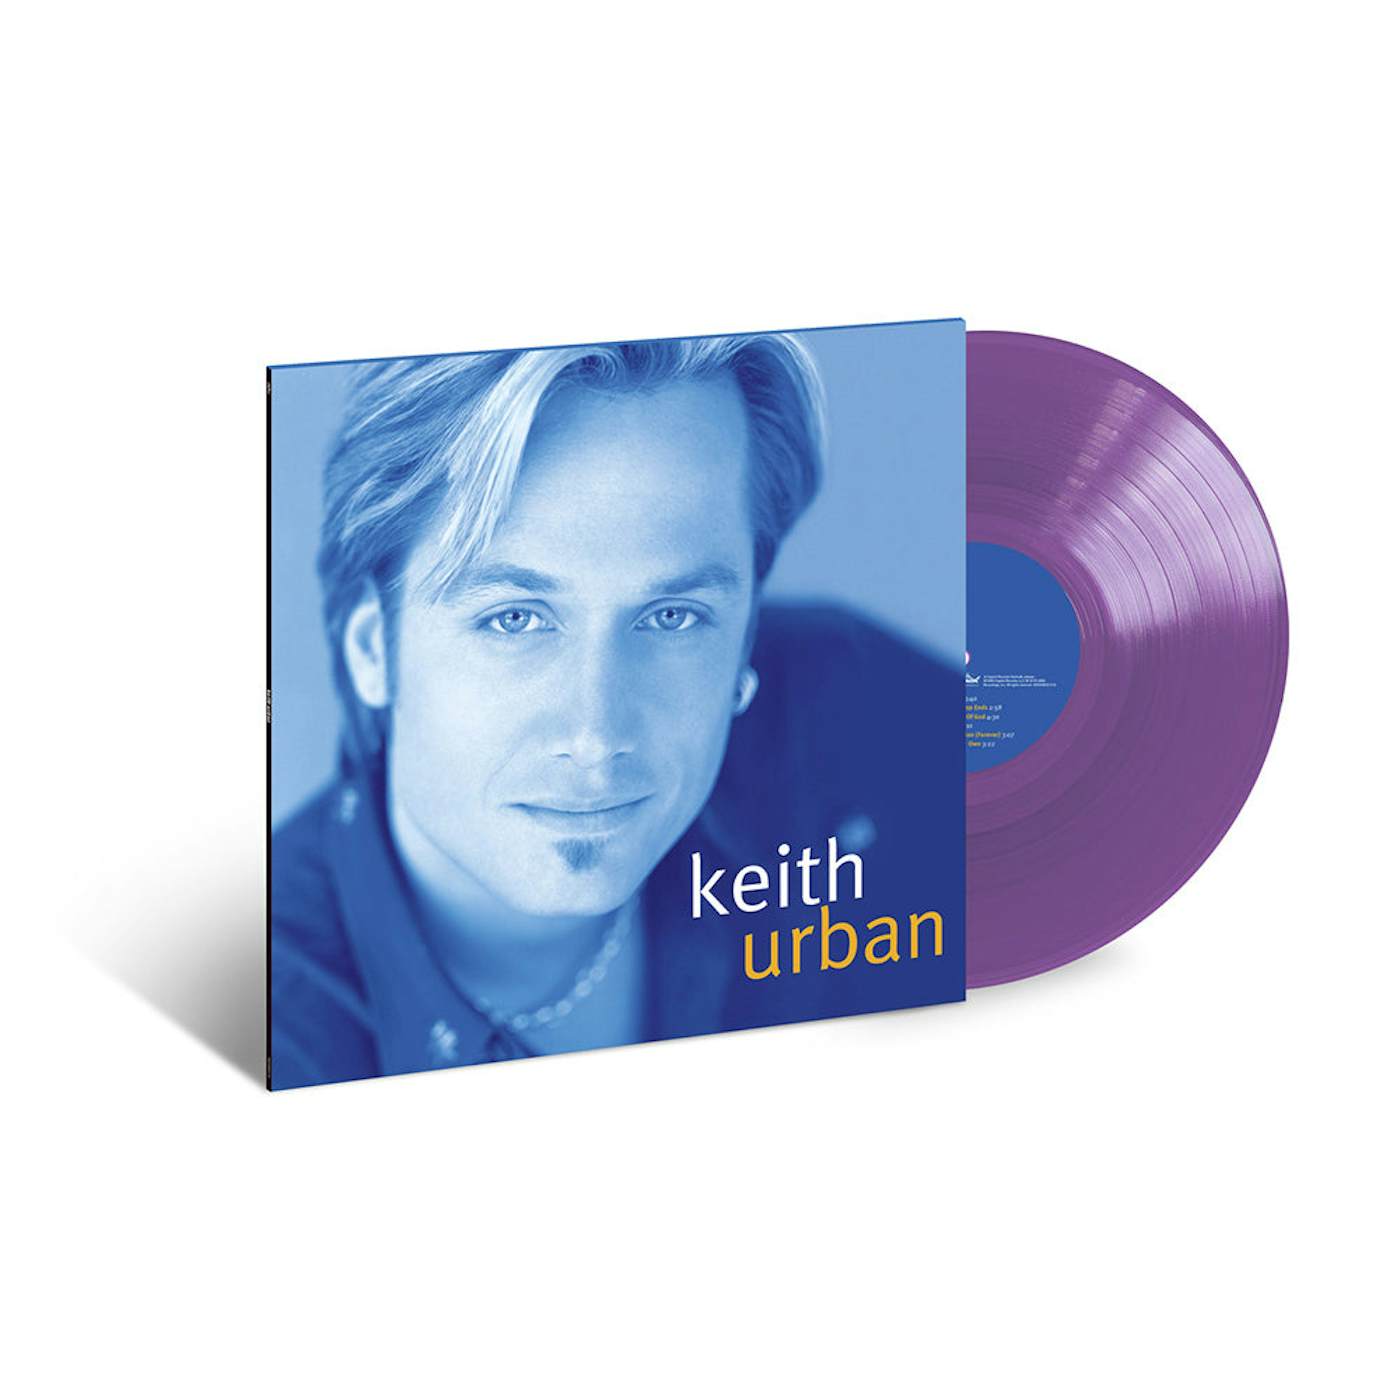 Keith Urban Limited Edition LP (Vinyl)